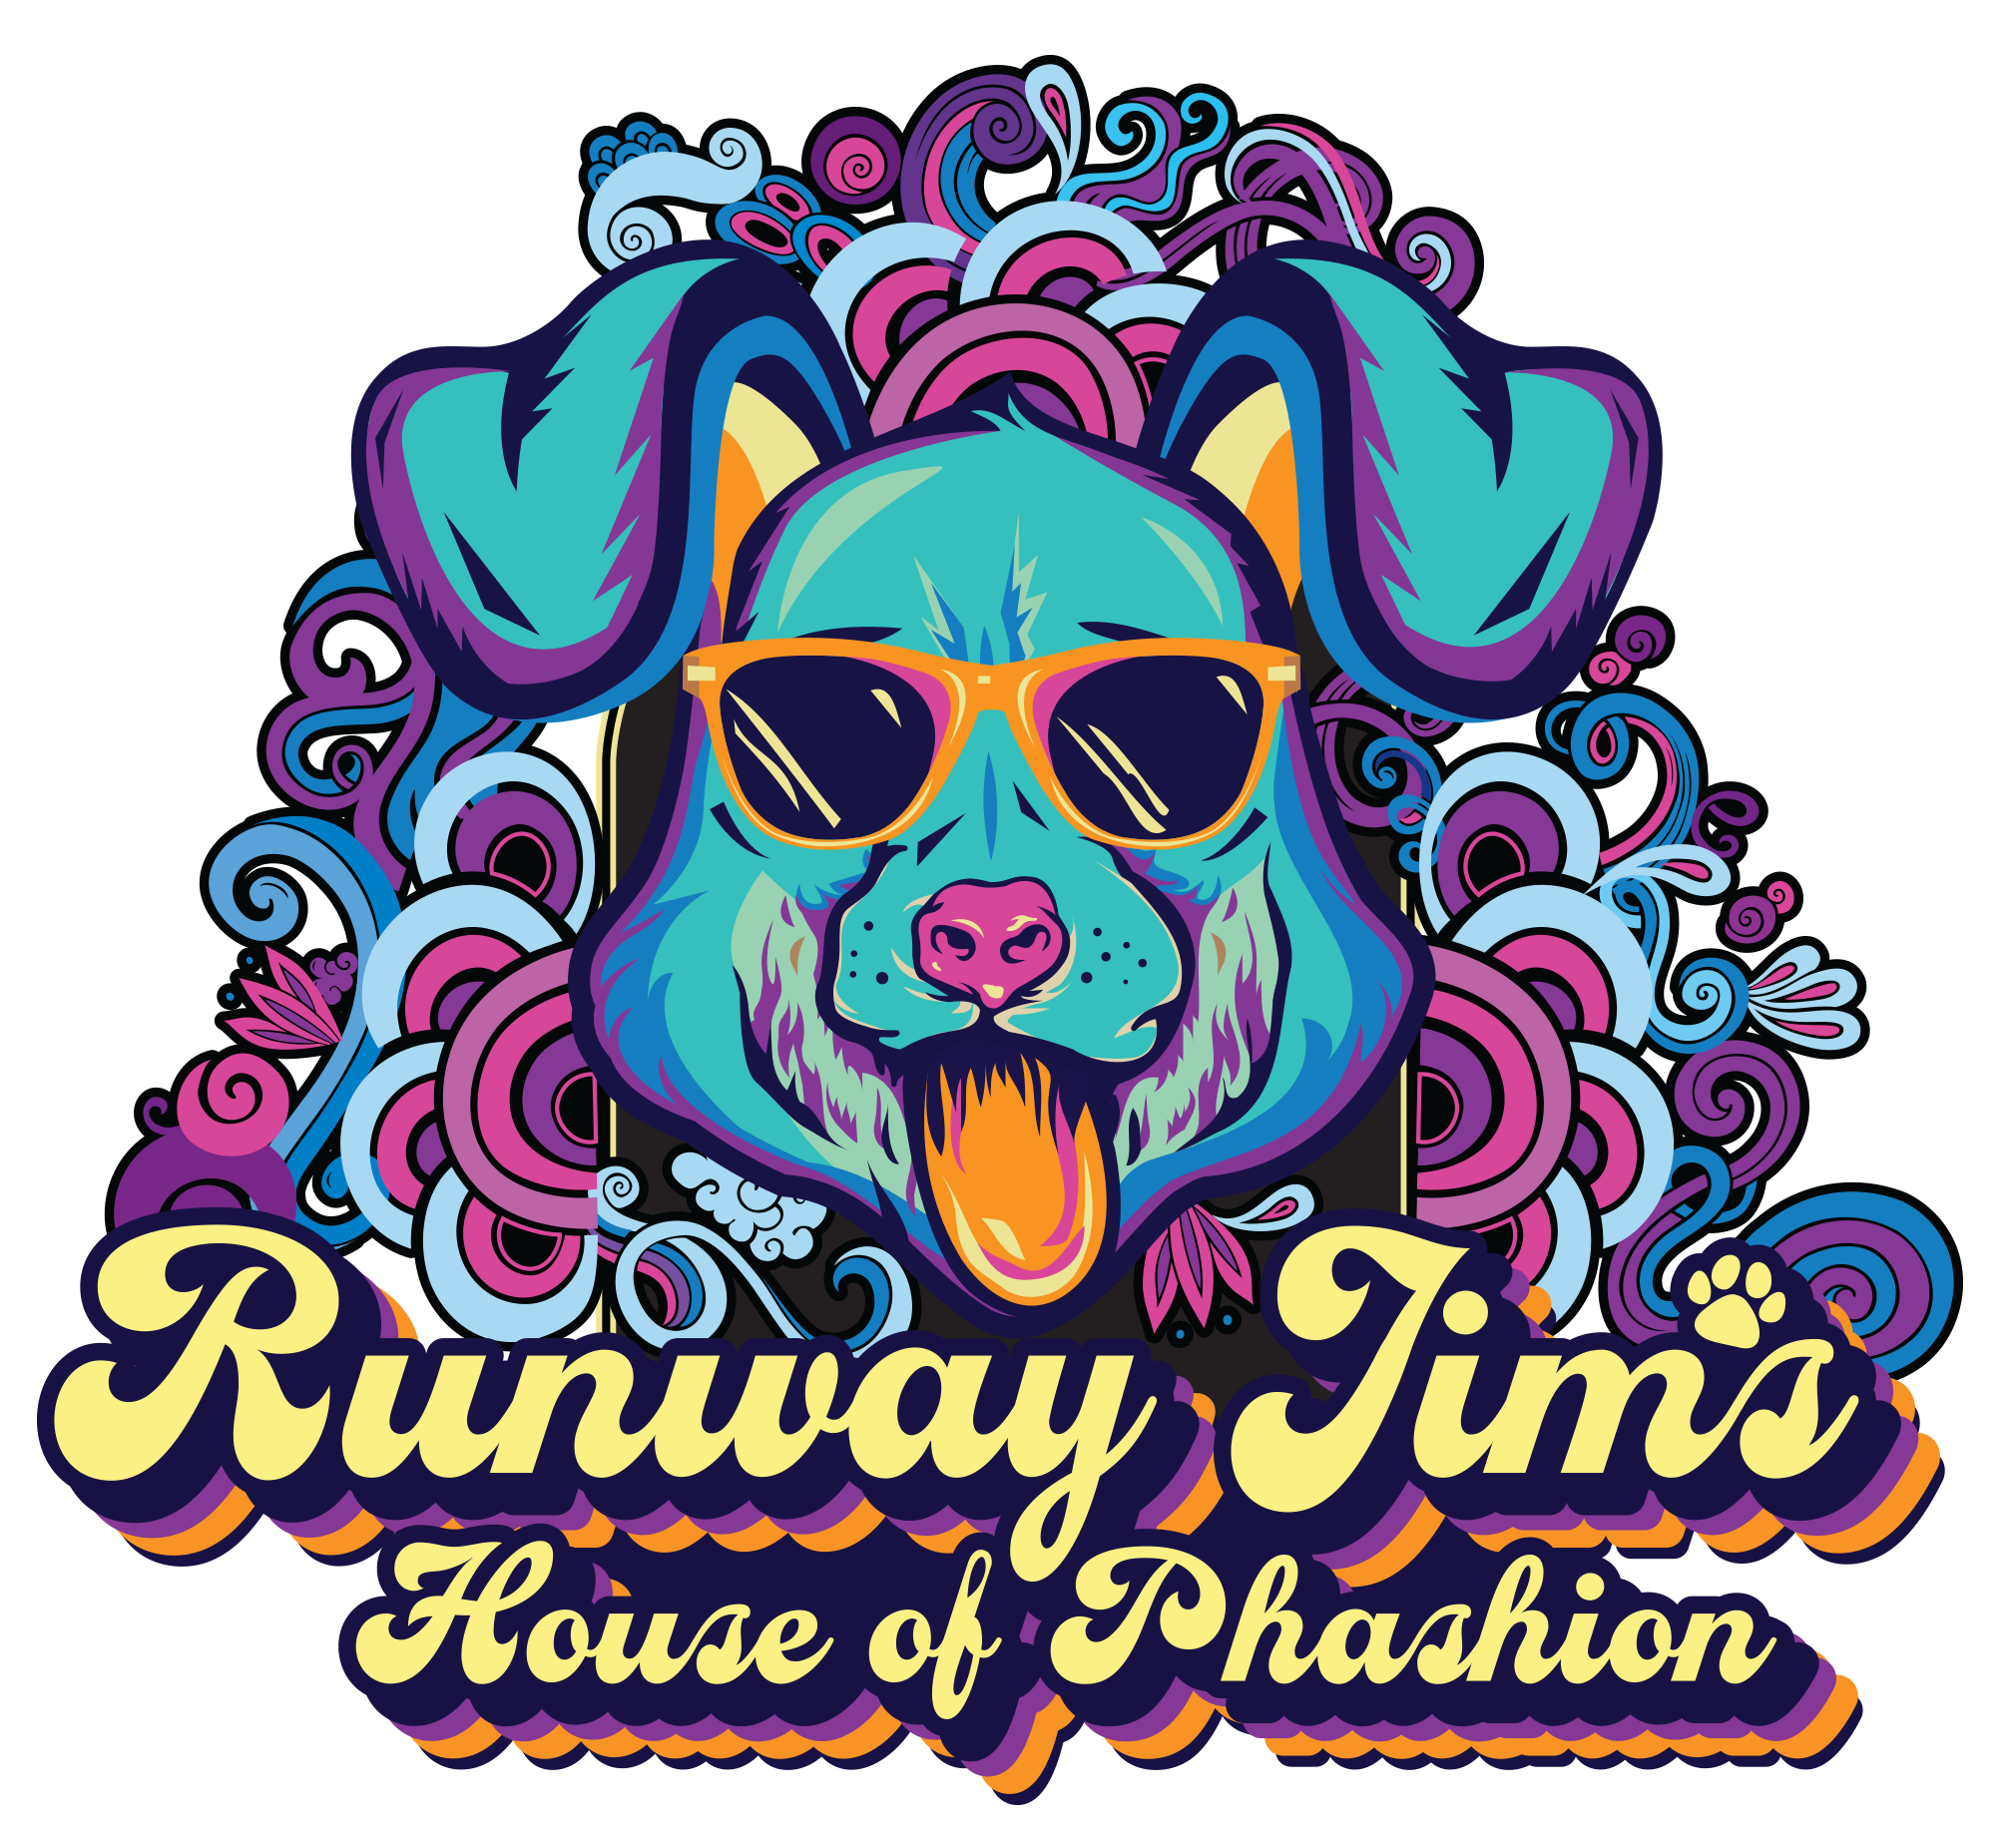 Phish Lot Shirts, T-Shirts, Apparel—Runway Jim's House of Phashion